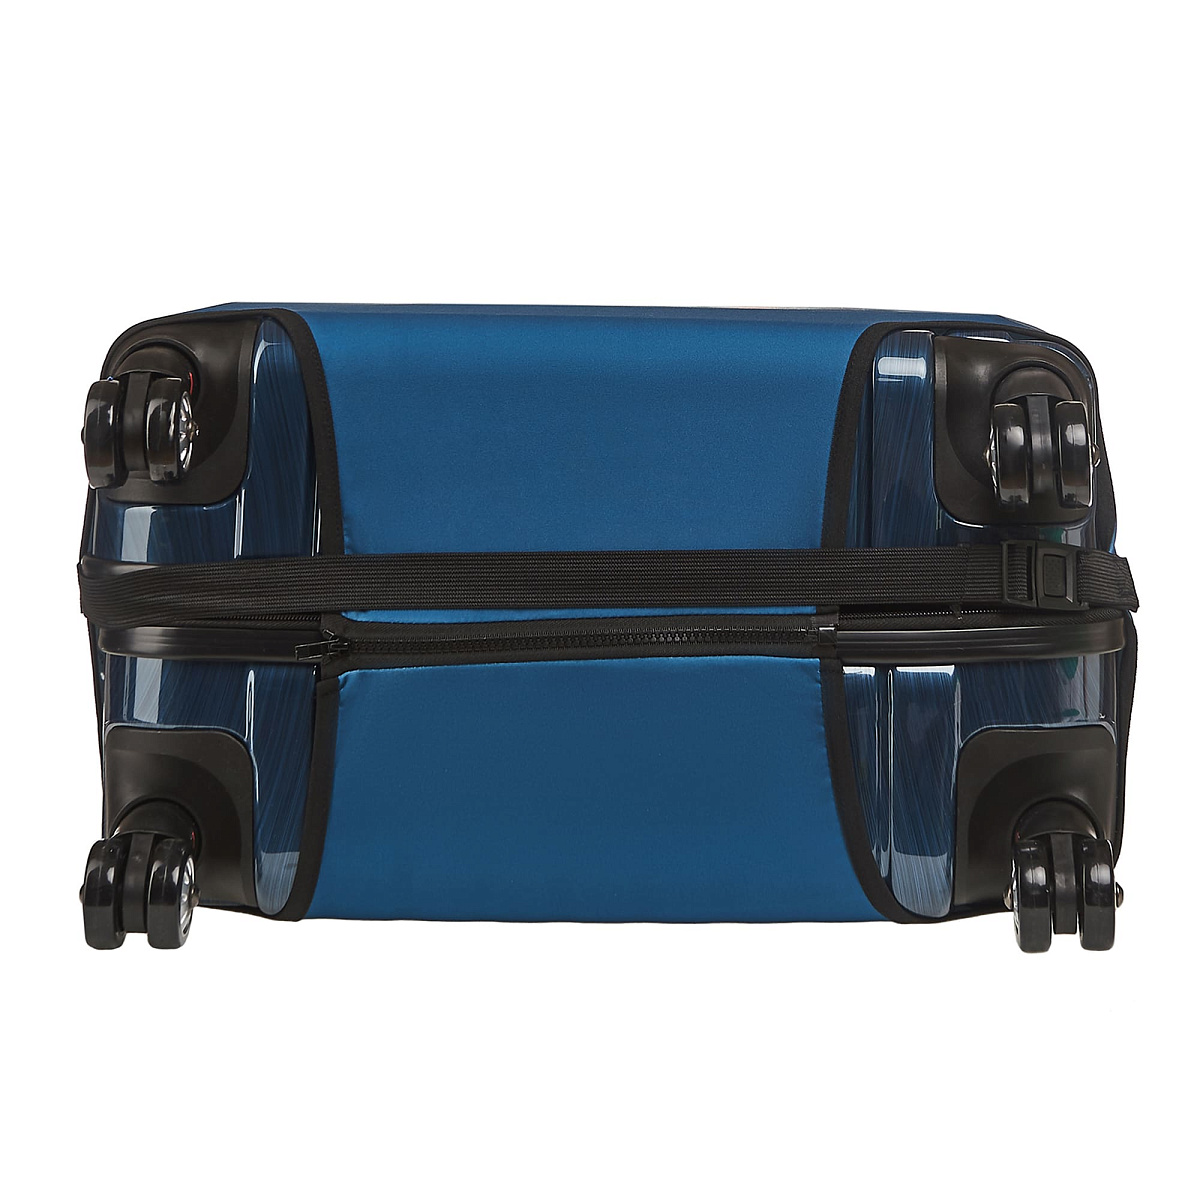 Др.Коффер LC-004L lt-blue чехол для чемодана